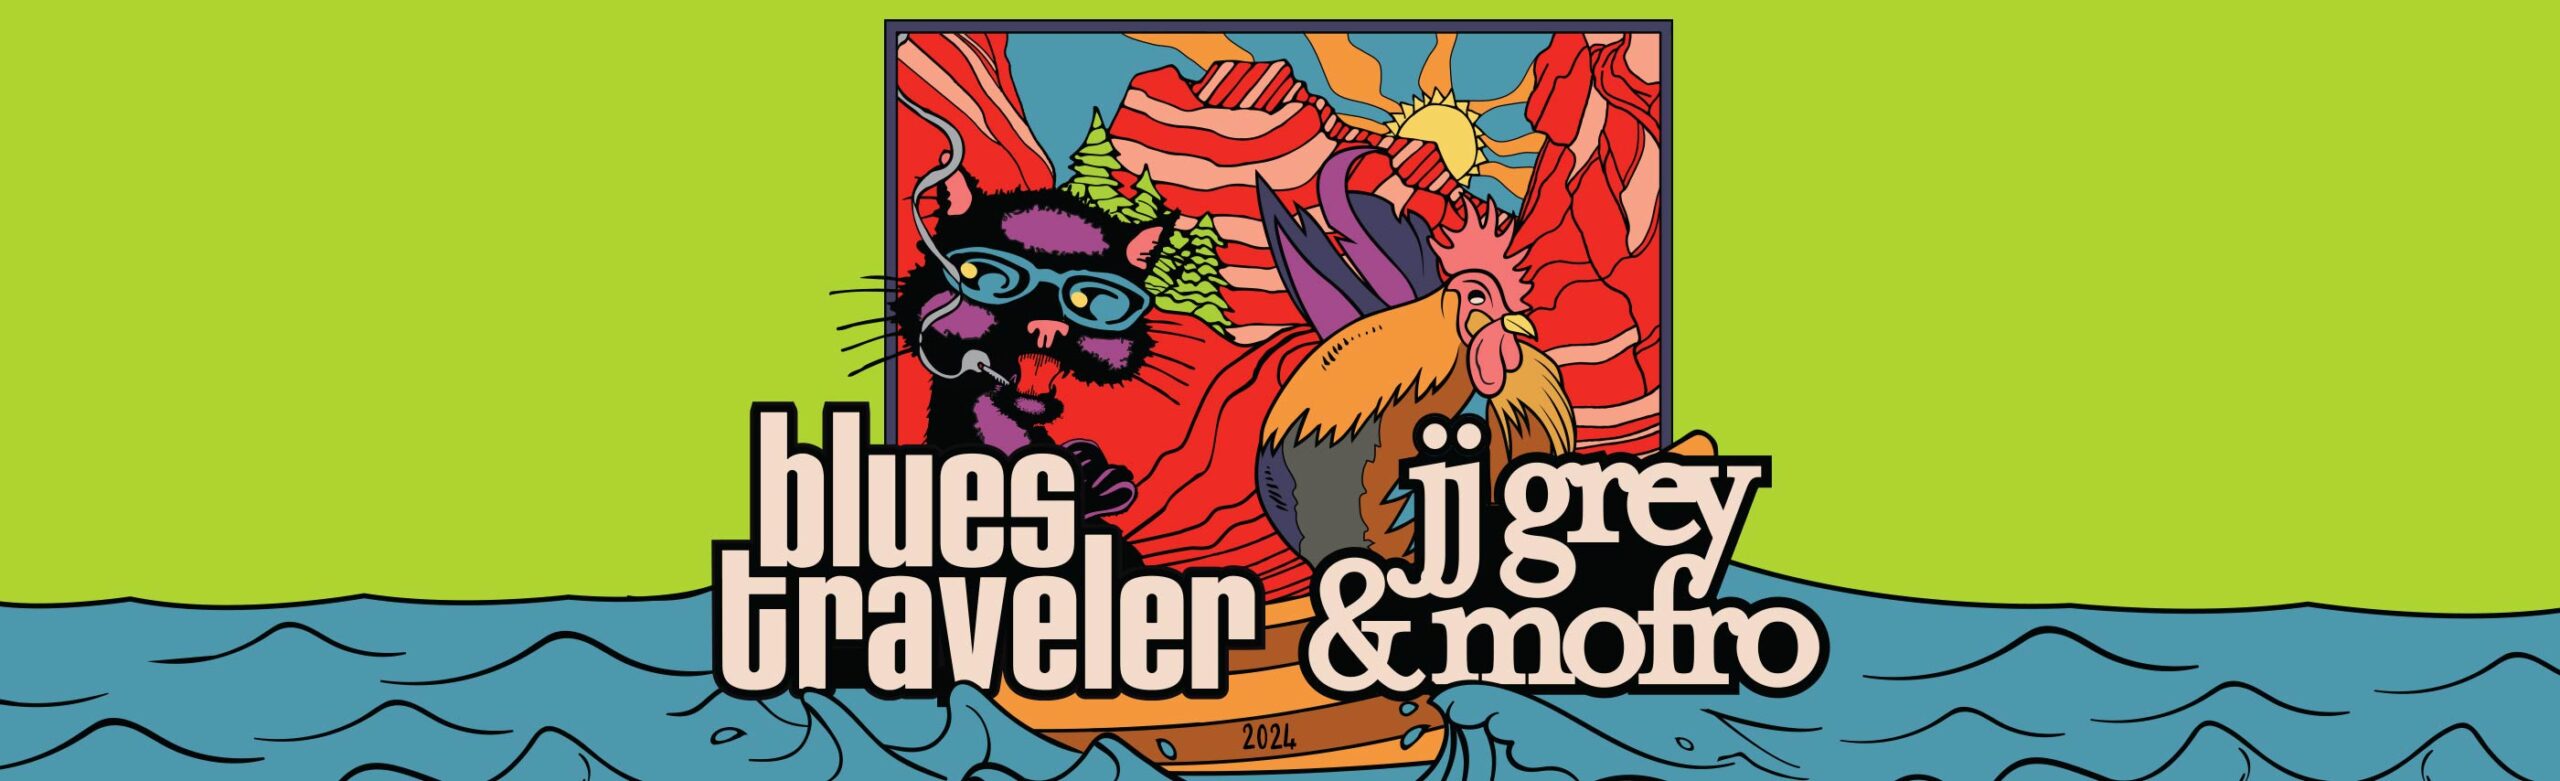 Blues Traveler and JJ Grey & Mofro